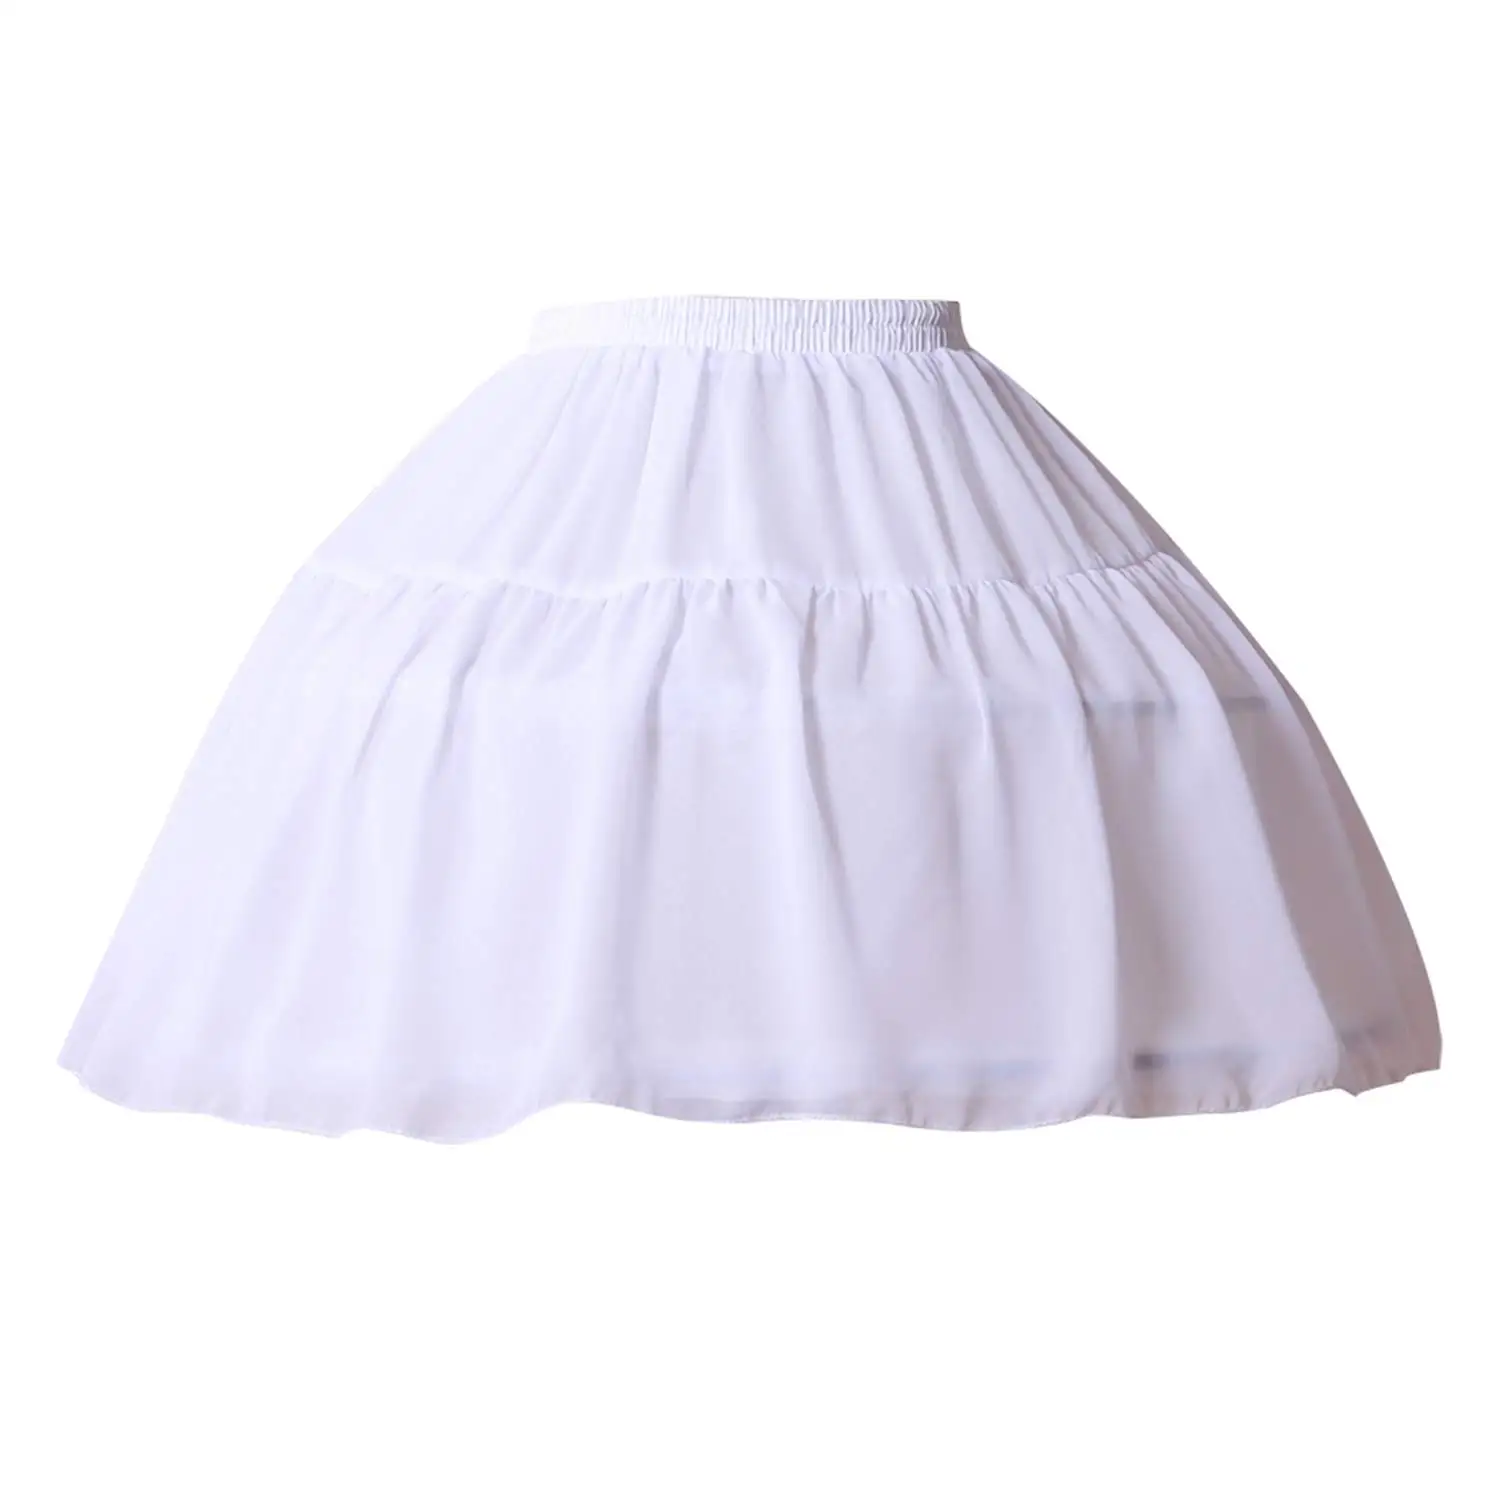 

Women Girls Crinoline Petticoat 2 Hoops Skirt Chiffon Ball Gown Short Half Slip Underskirt for Lolita Cosplay